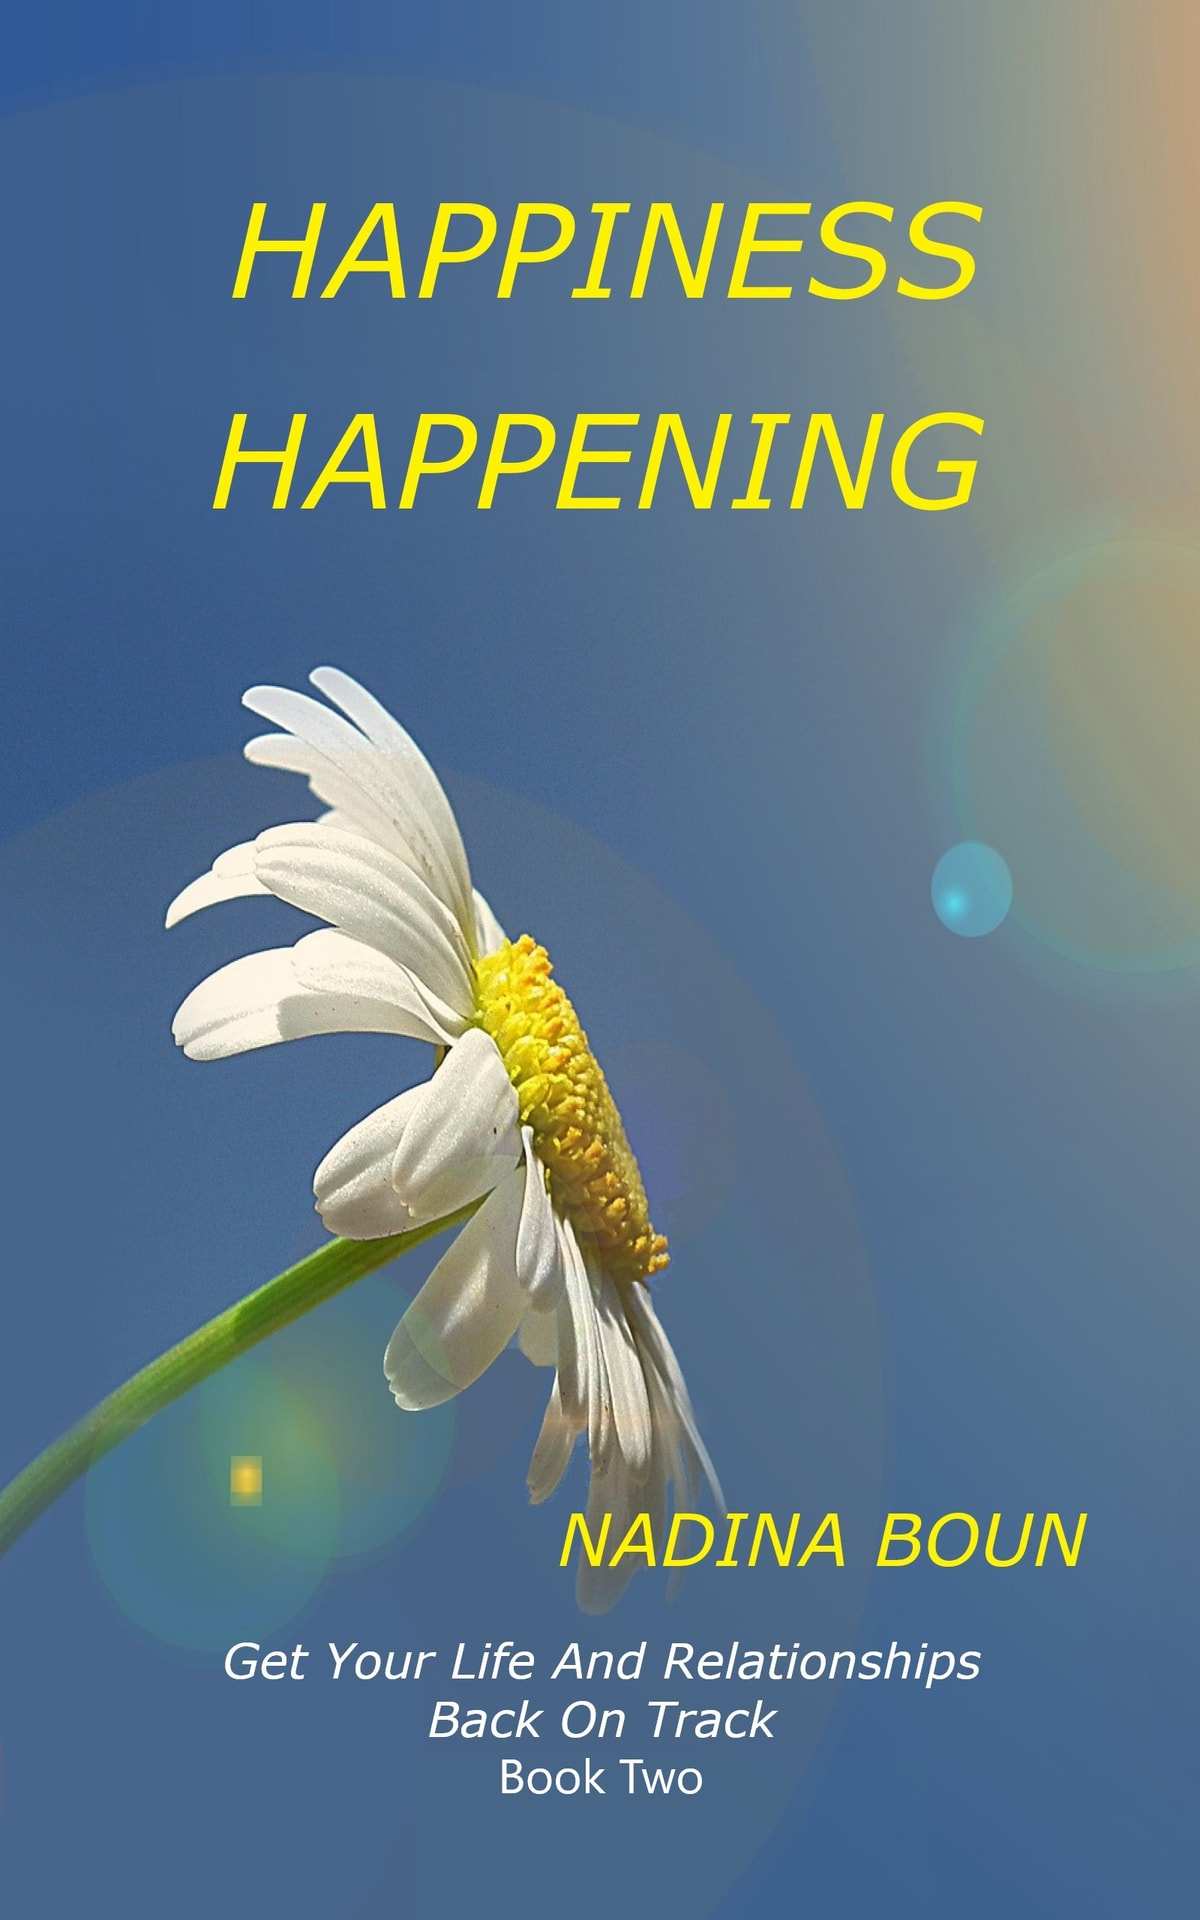 FREE: Happiness Happening by Nadina Boun